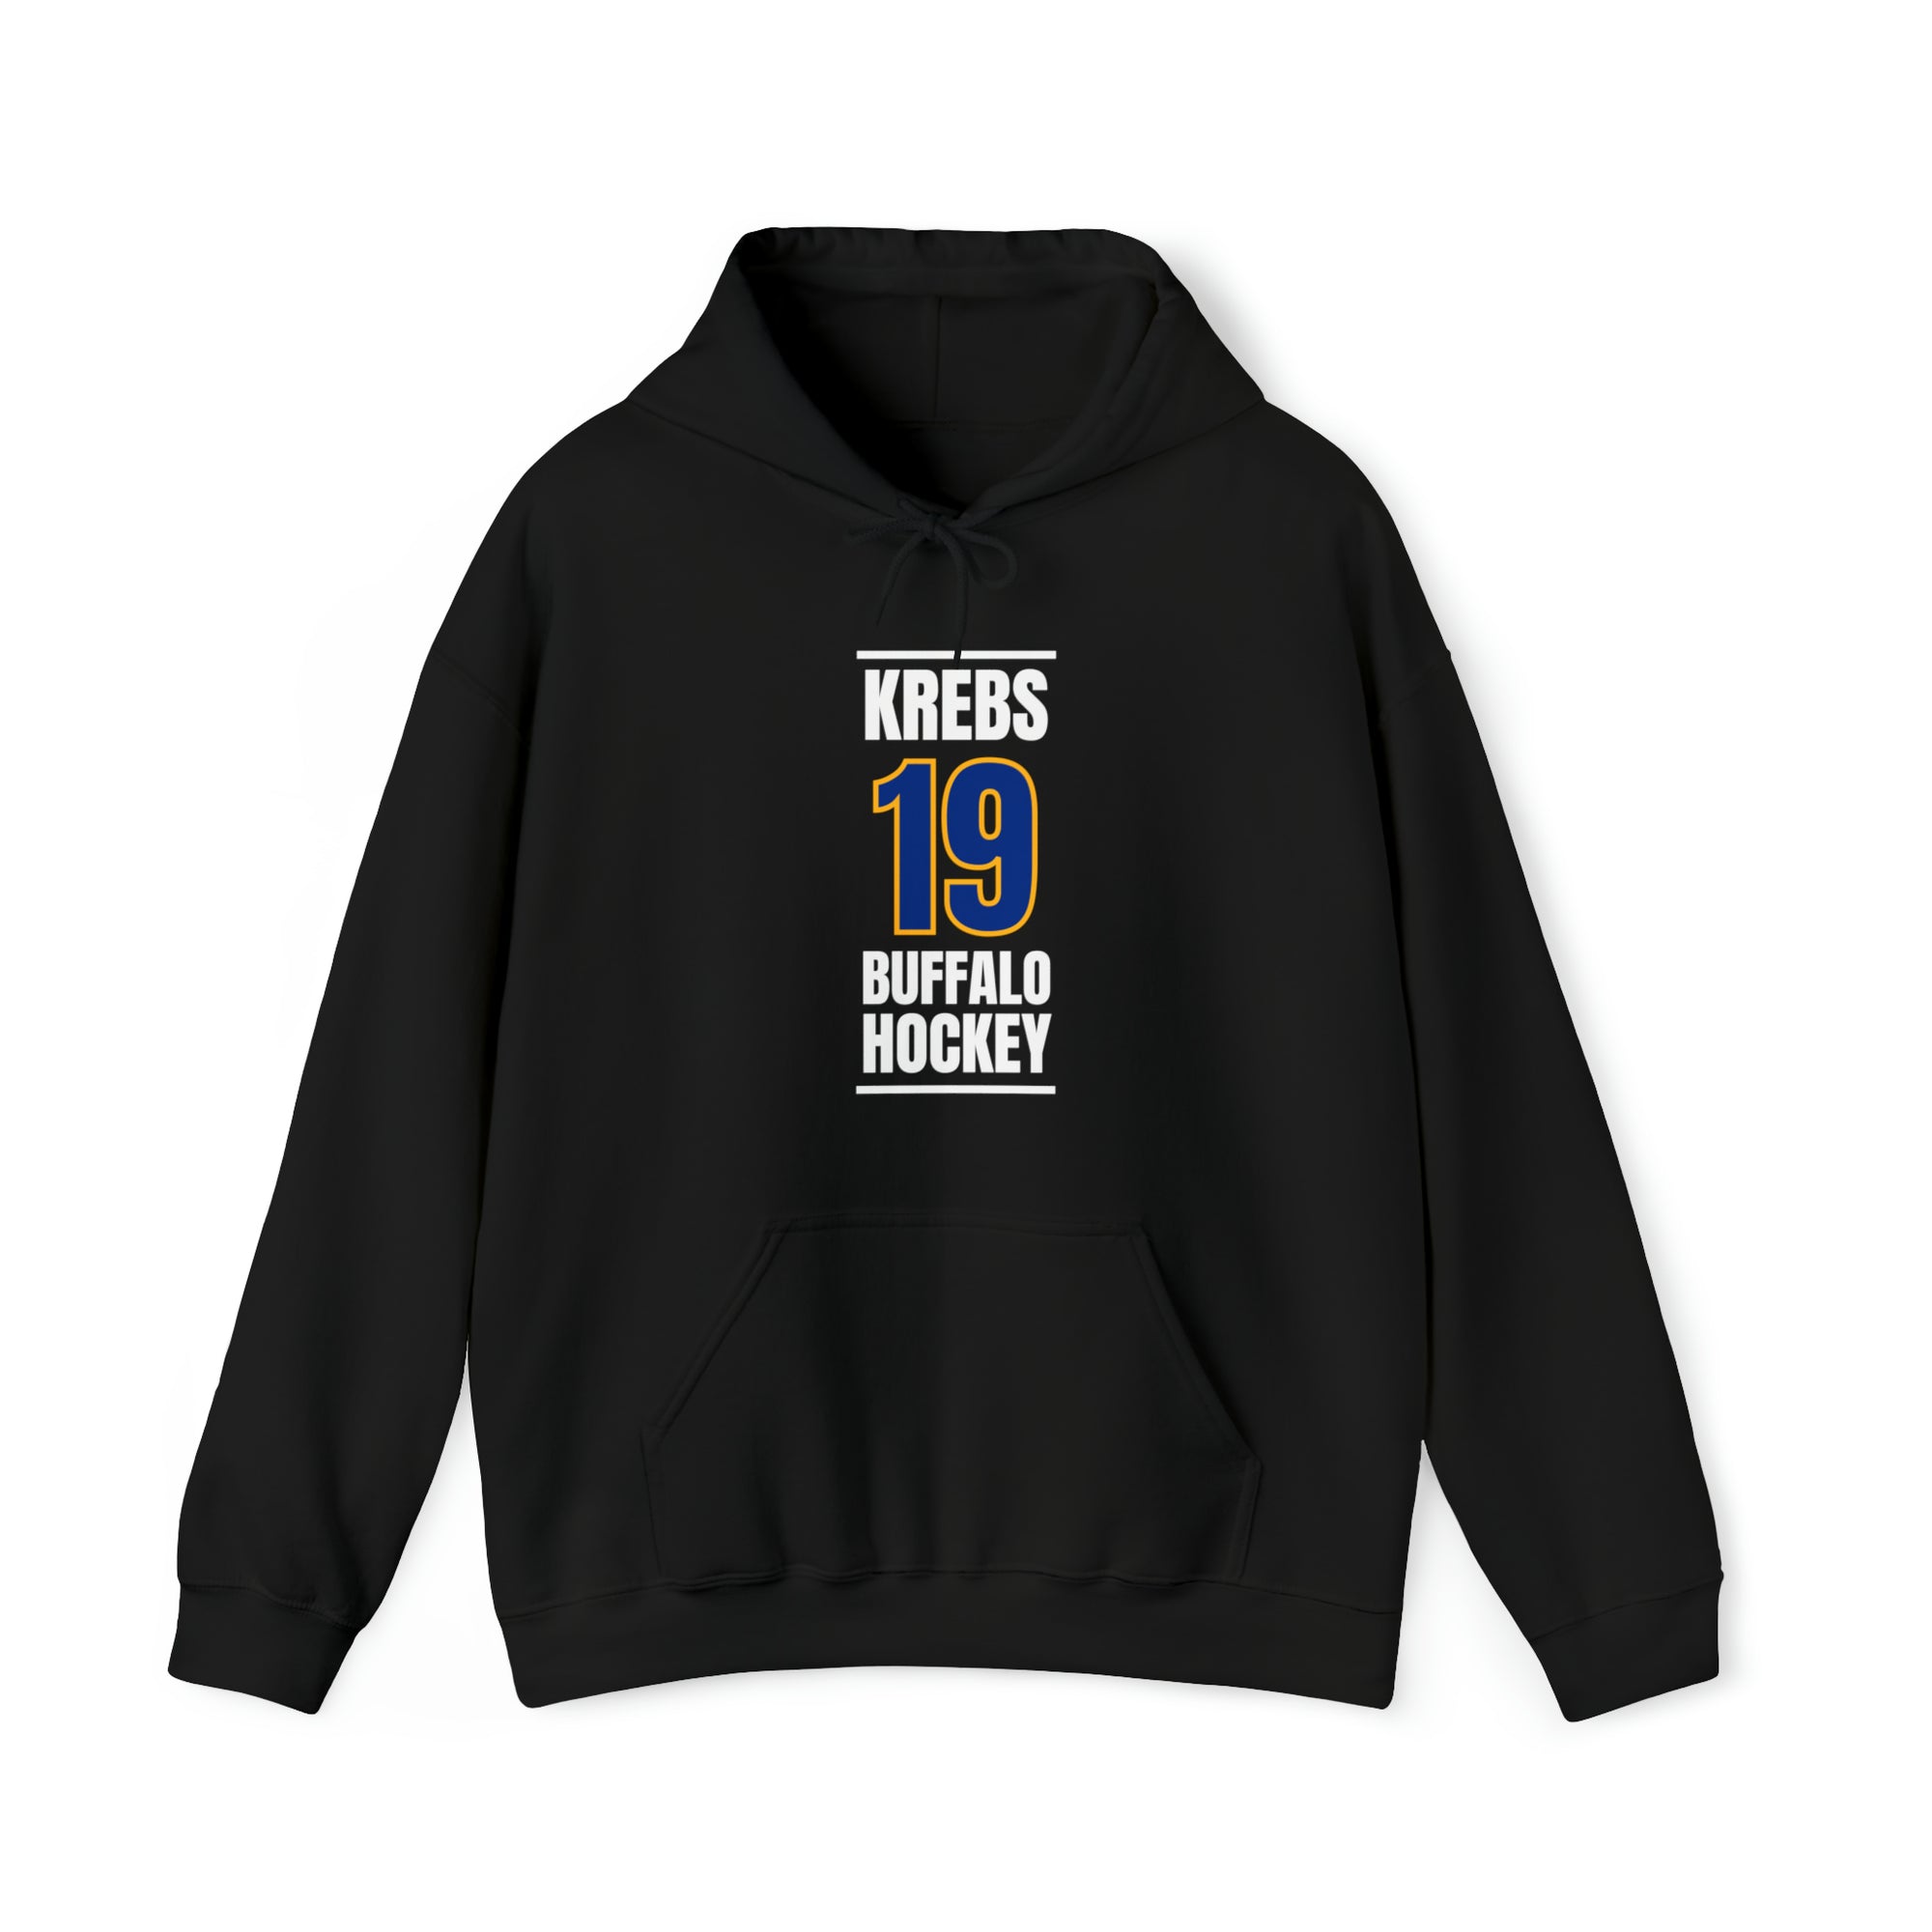 Krebs 19 Buffalo Hockey Royal Blue Vertical Design Unisex Hooded Sweatshirt